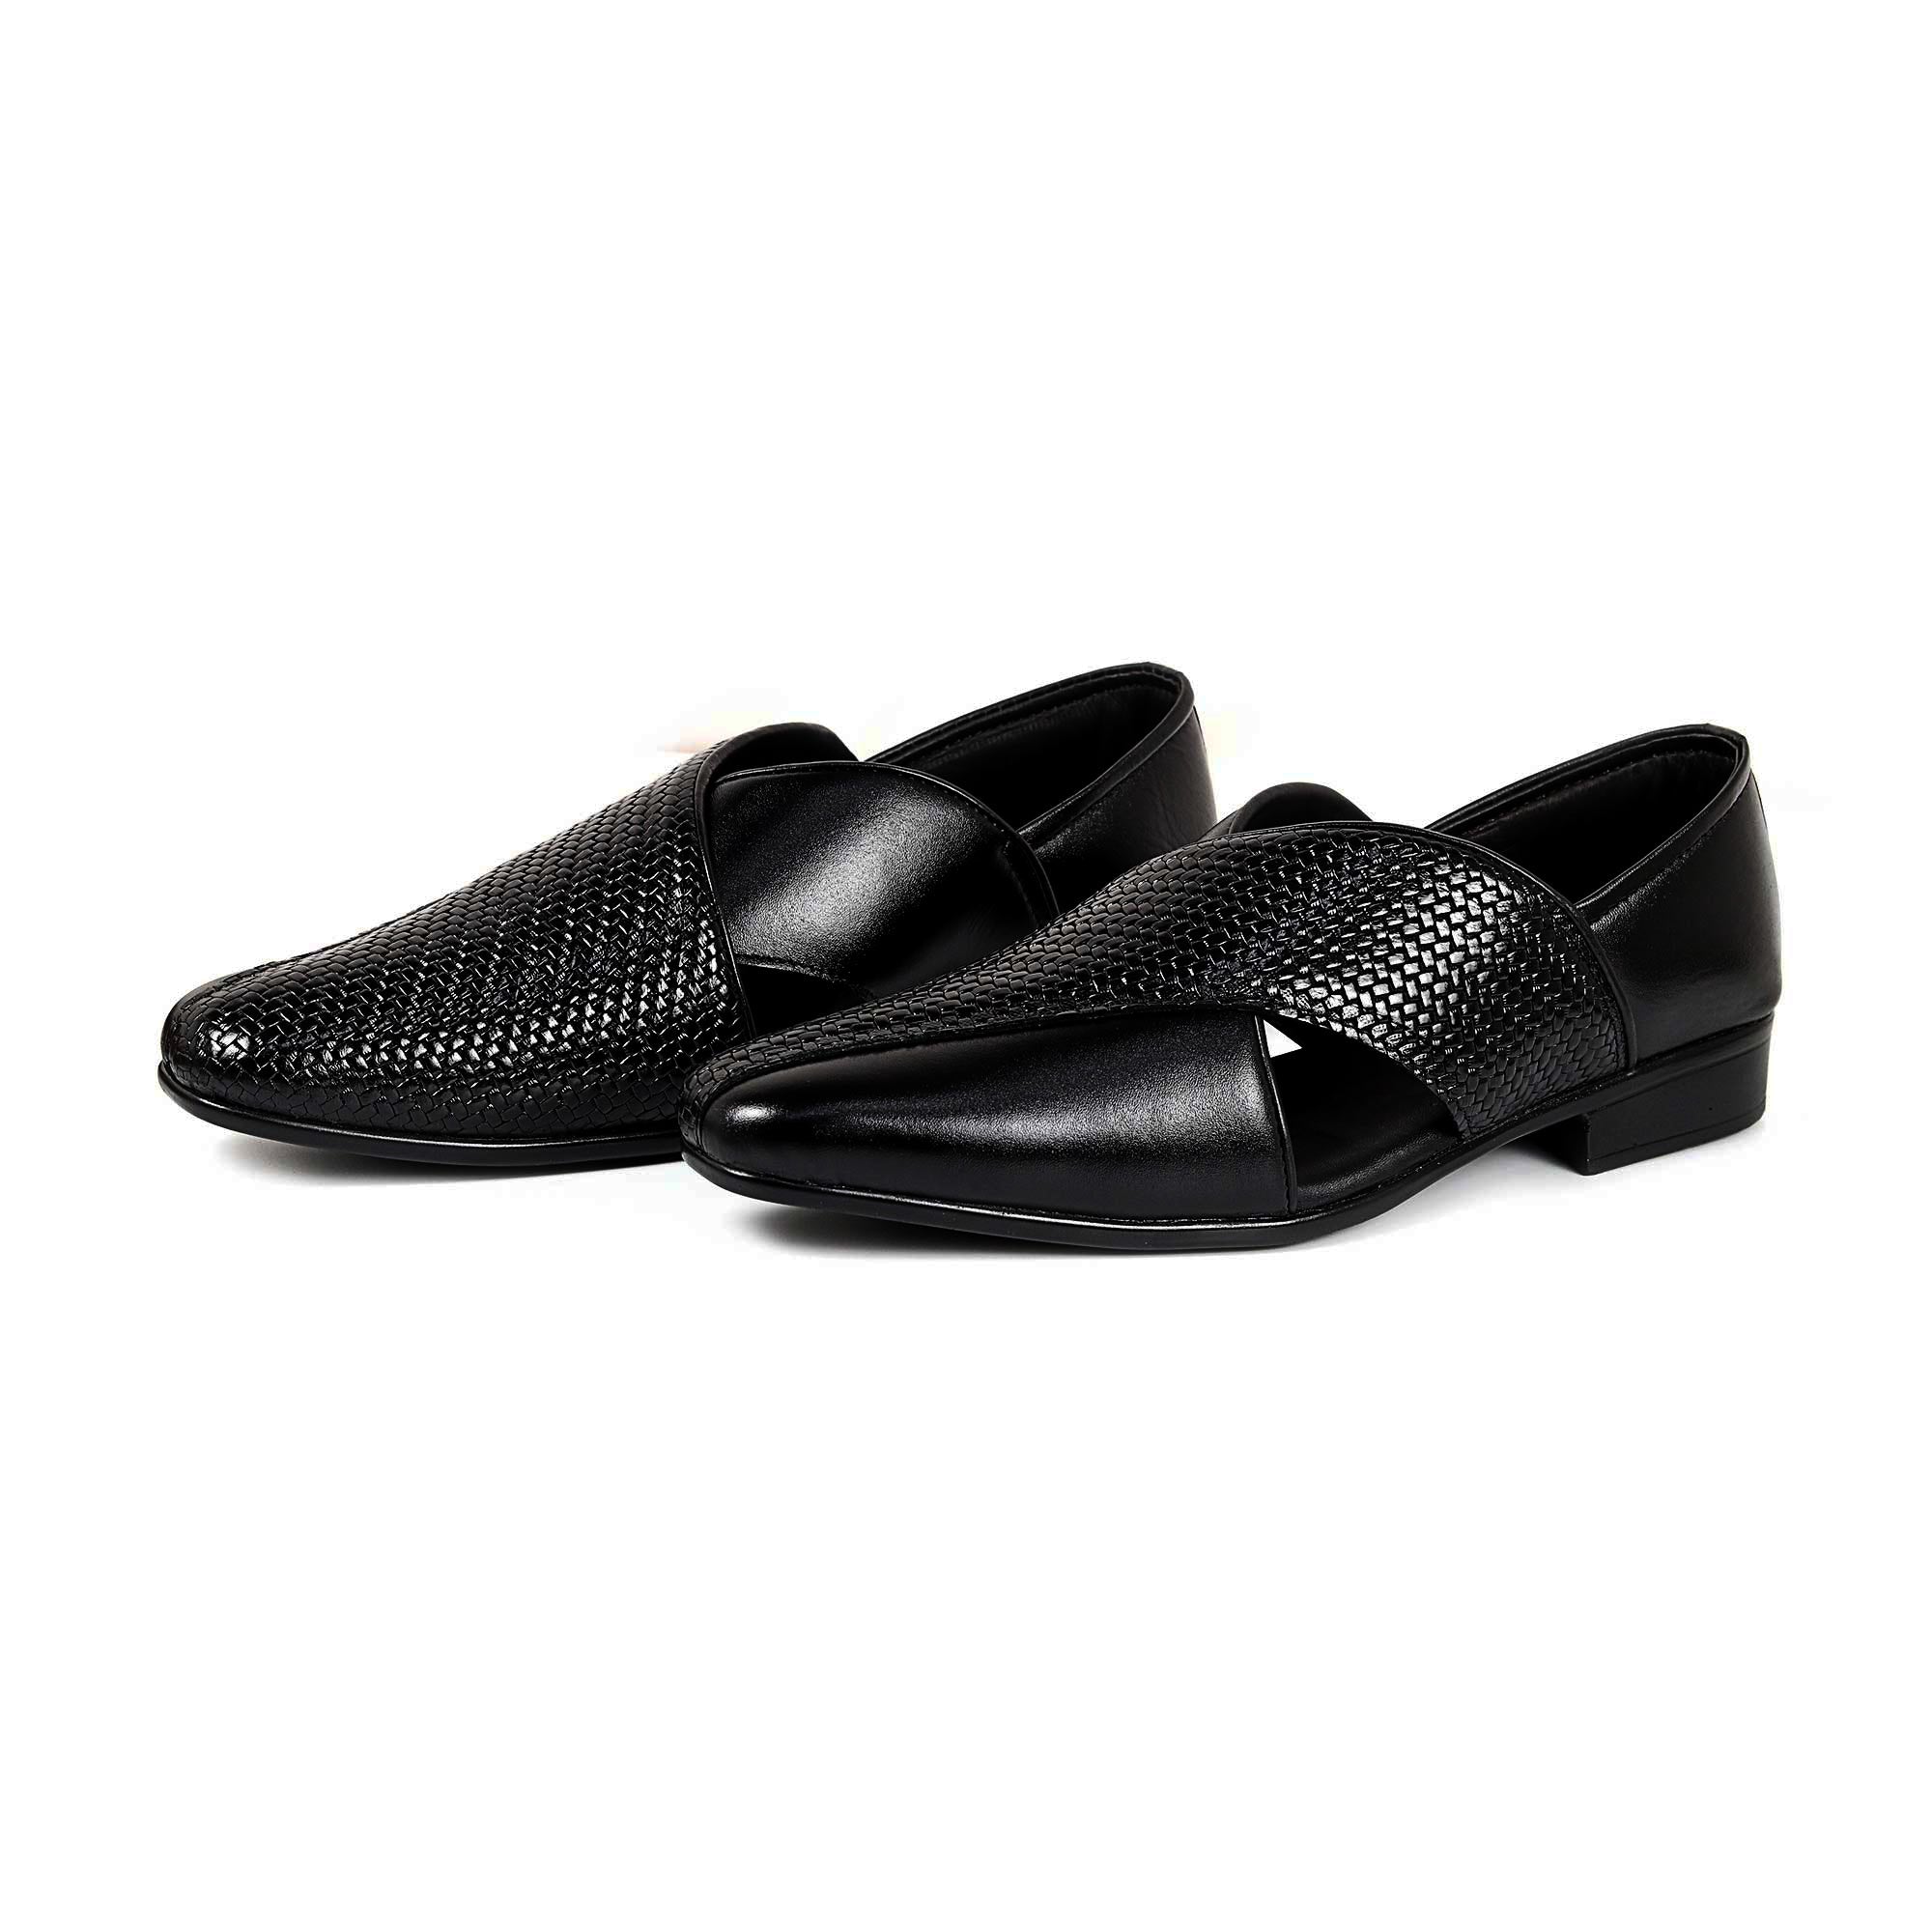 Zays Leather Premium Casual Sandal For Men (Black) - ZAYSSF42